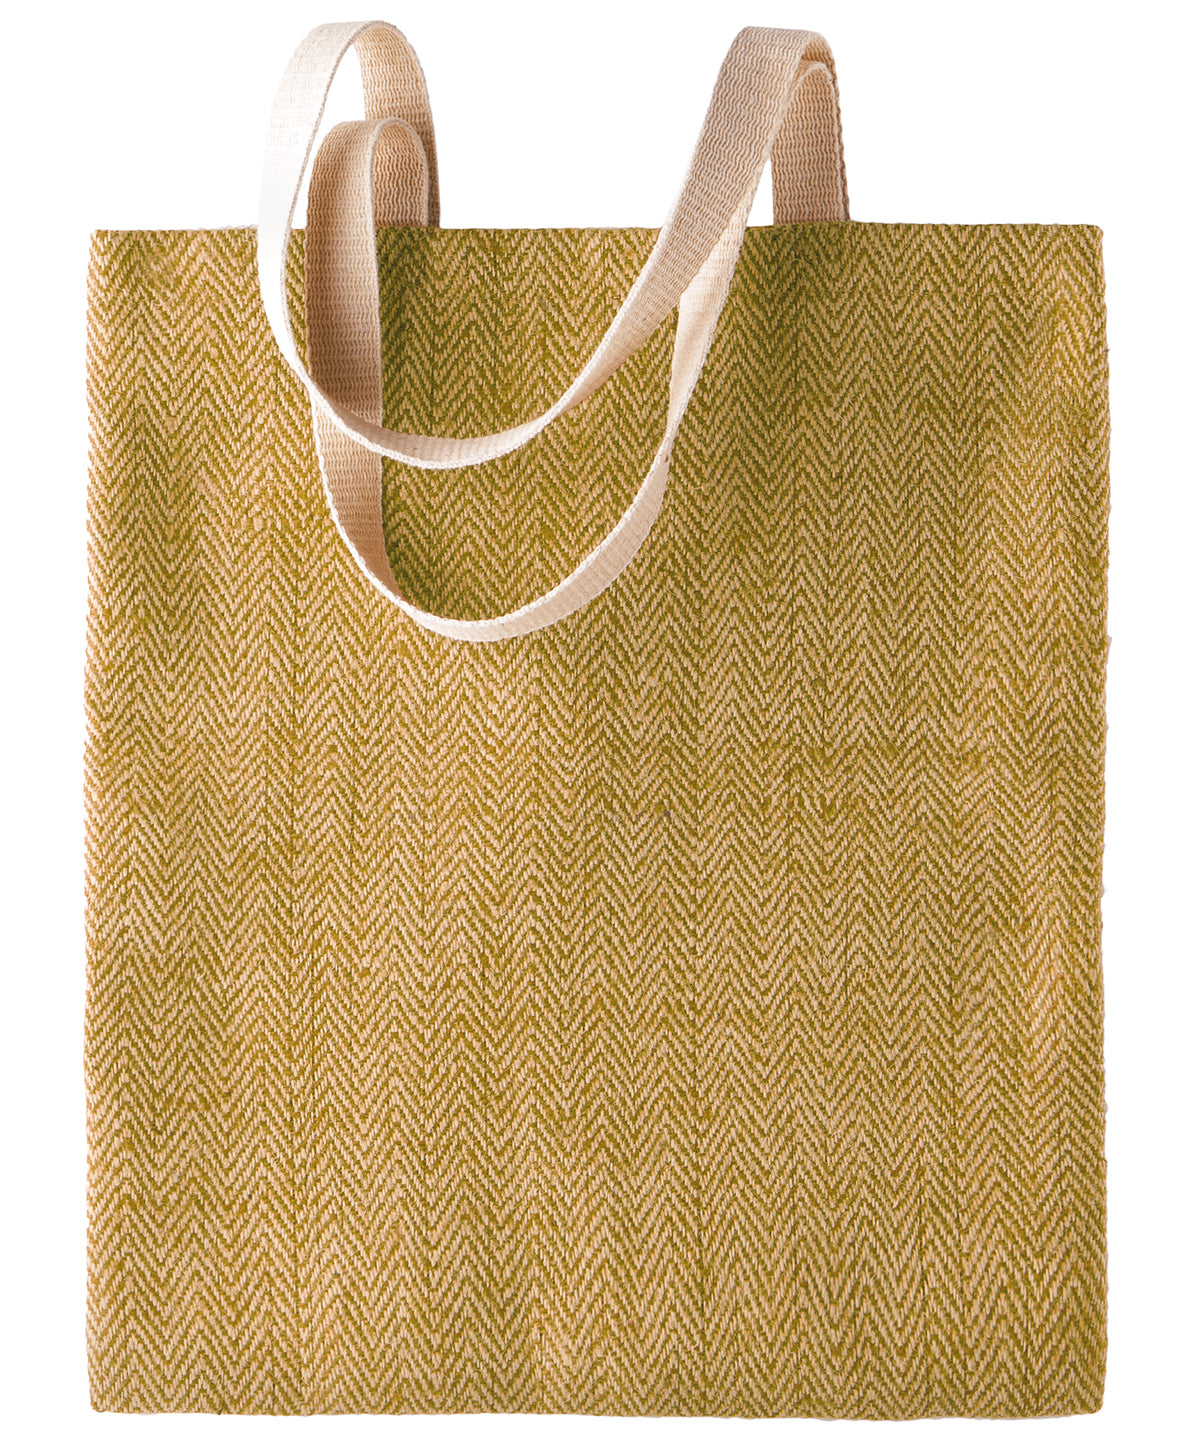 Personalised Bags - Natural KiMood 100% natural yarn dyed jute bag